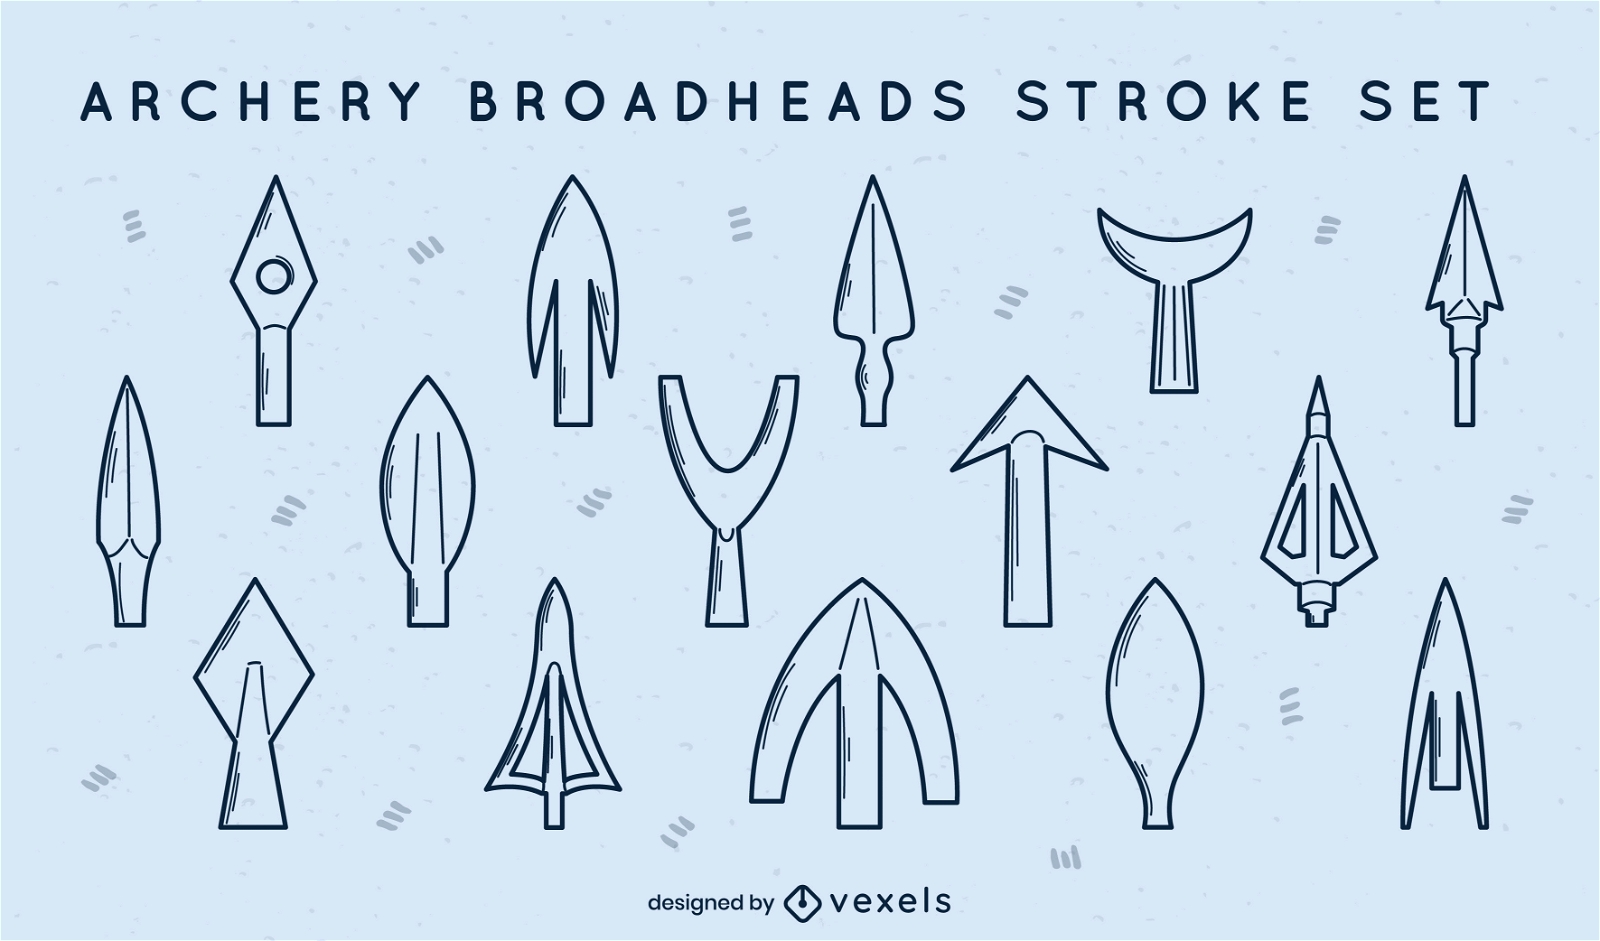 Archery broadheads stroke set